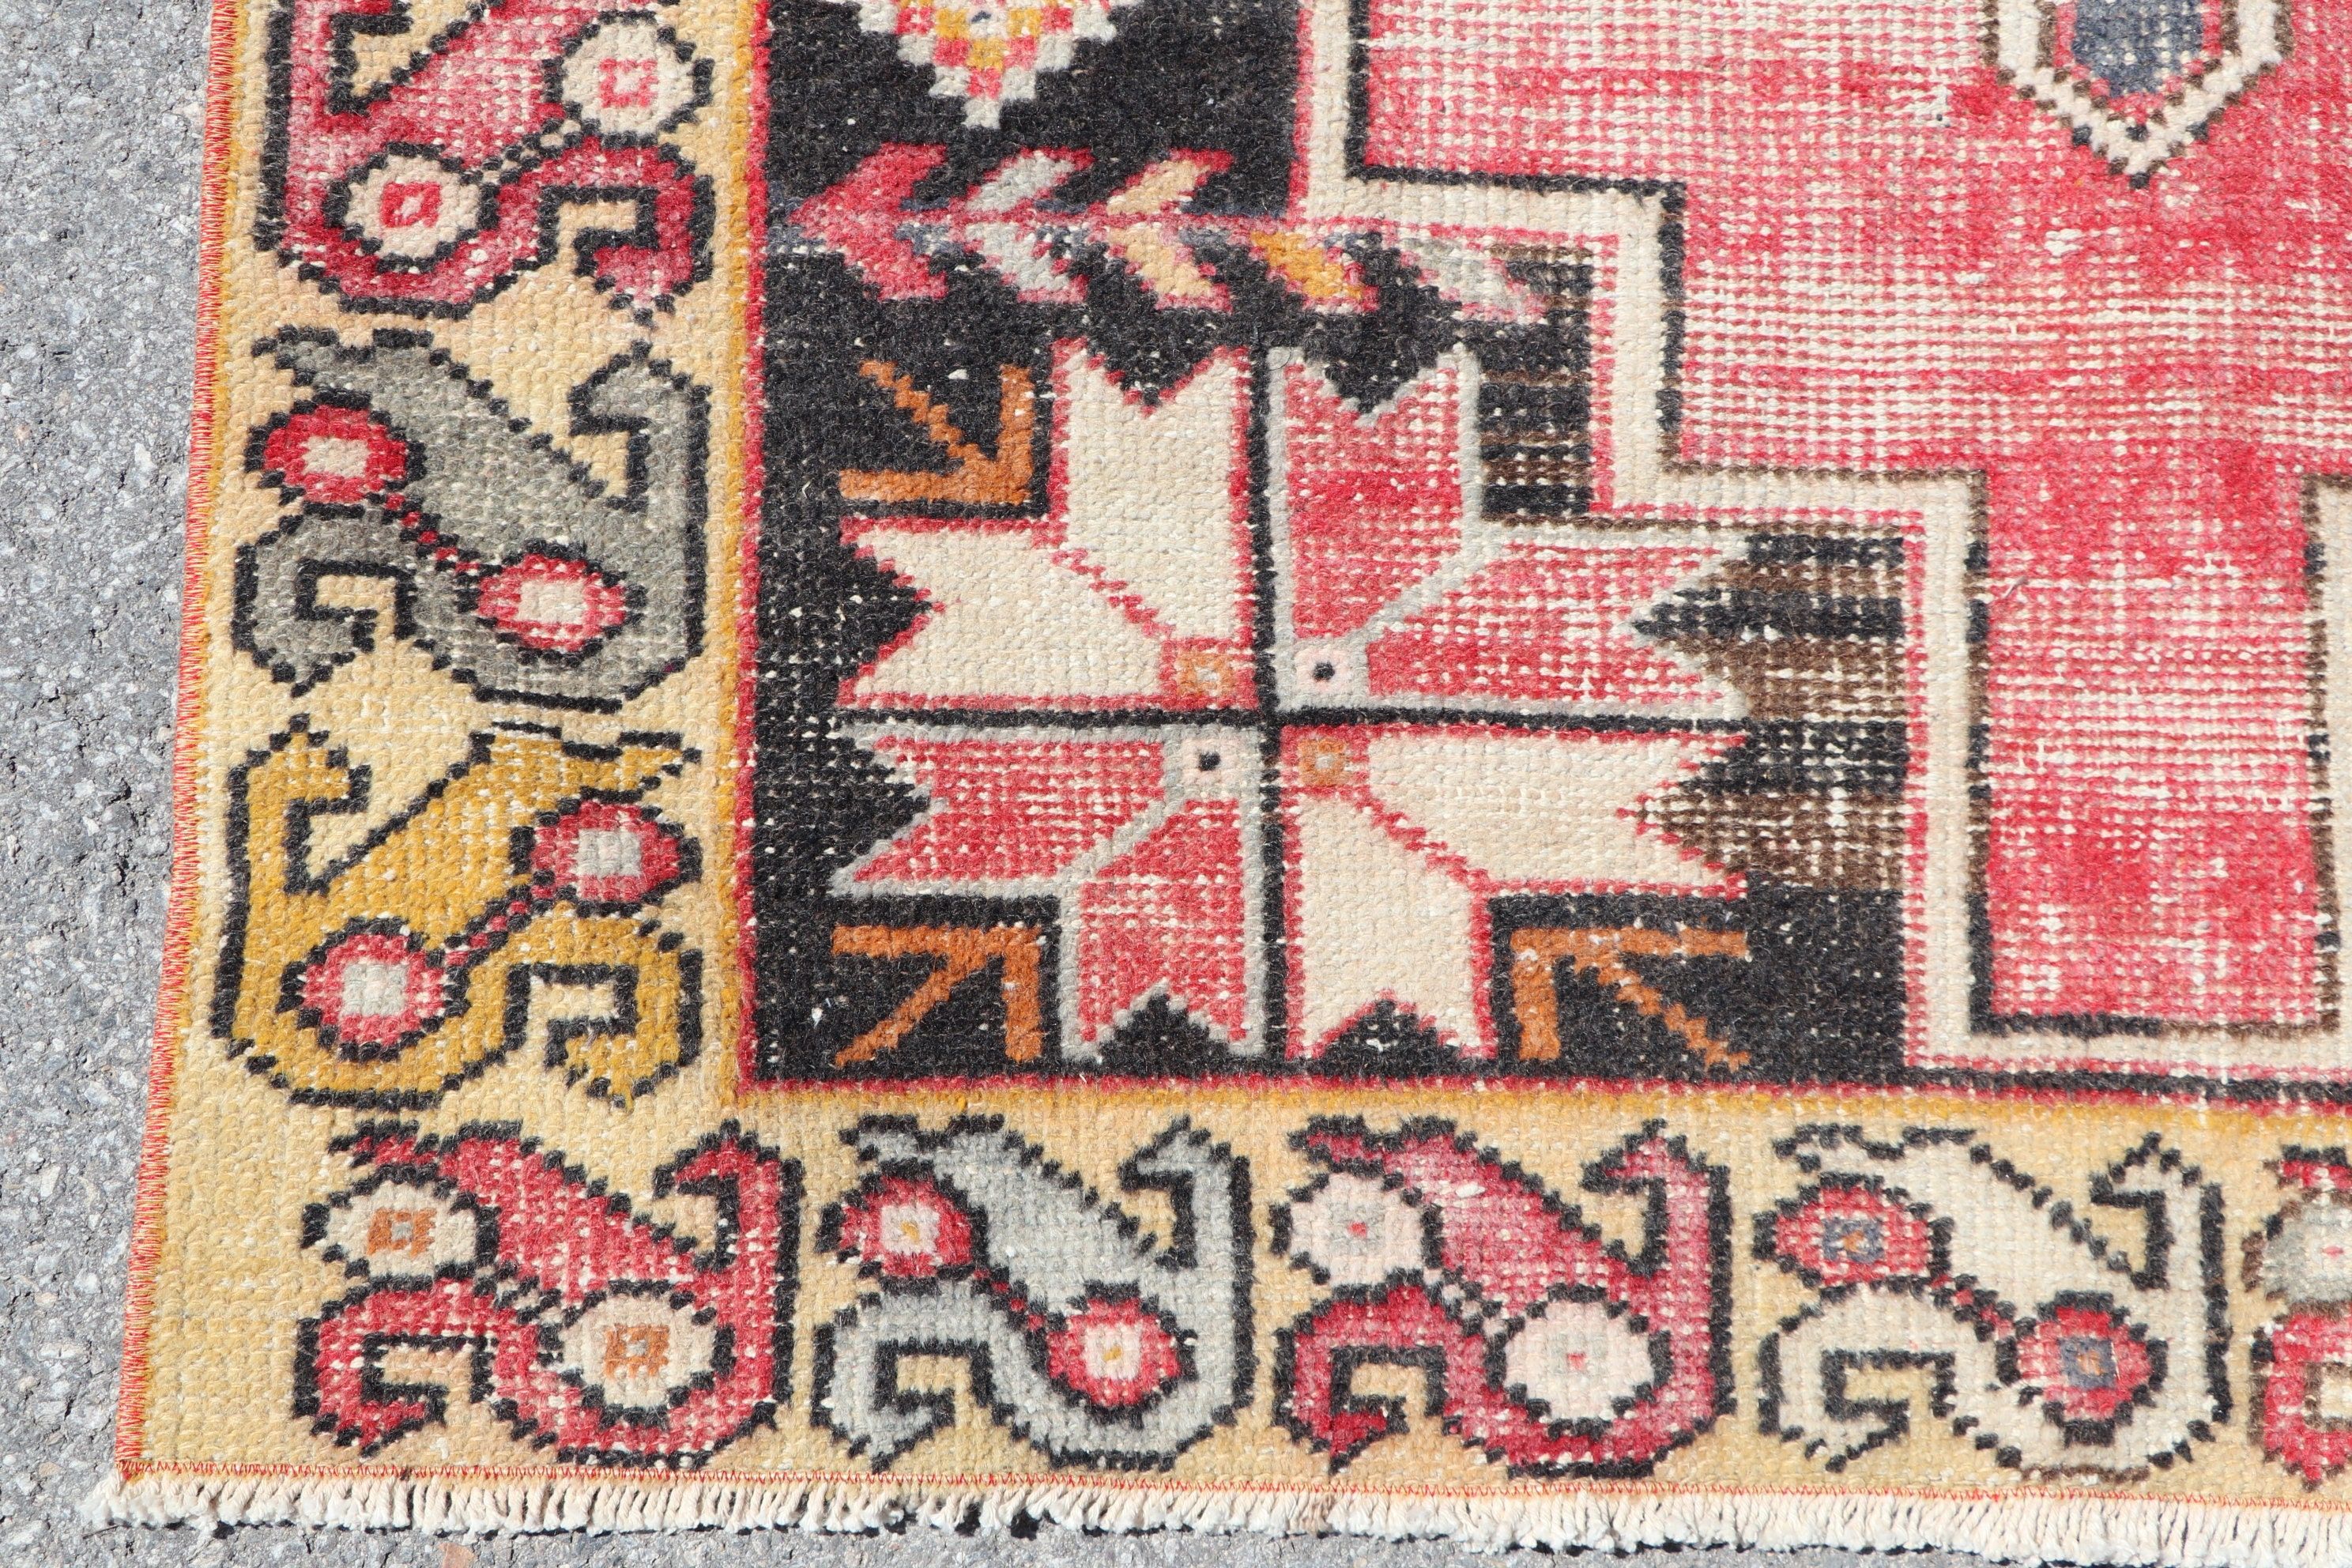 Anatolian Rugs, Turkish Rug, Bedroom Rugs, 3.7x8.9 ft Area Rug, Red Moroccan Rug, Vintage Rugs, Vintage Decor Rug, Rugs for Nursery